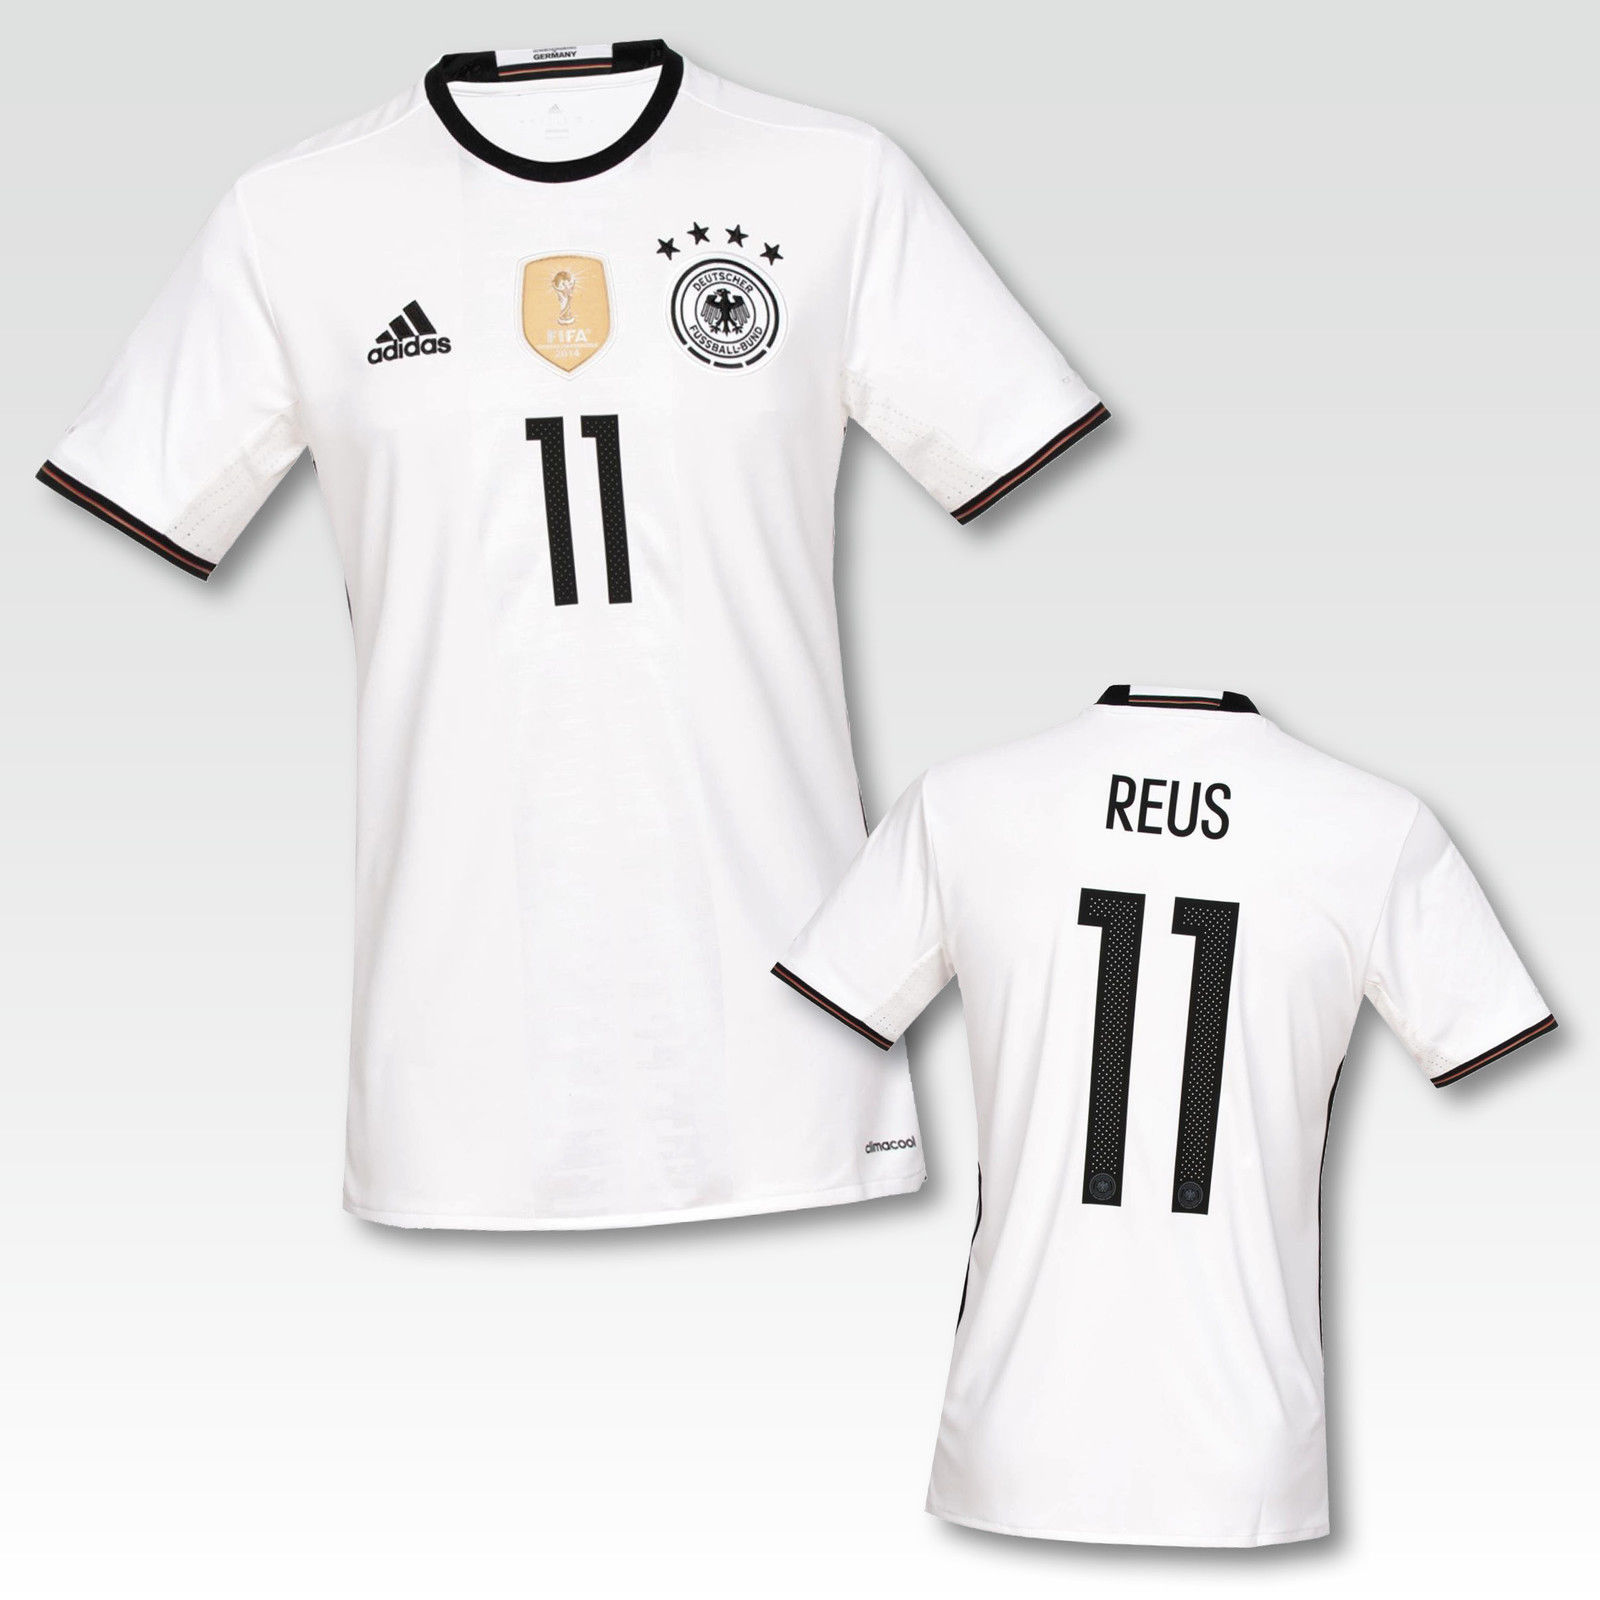 Adidas DFB Trikot EM 2016 Heimtrikot weiß Deutschland Kinder mit Flock Name Neu